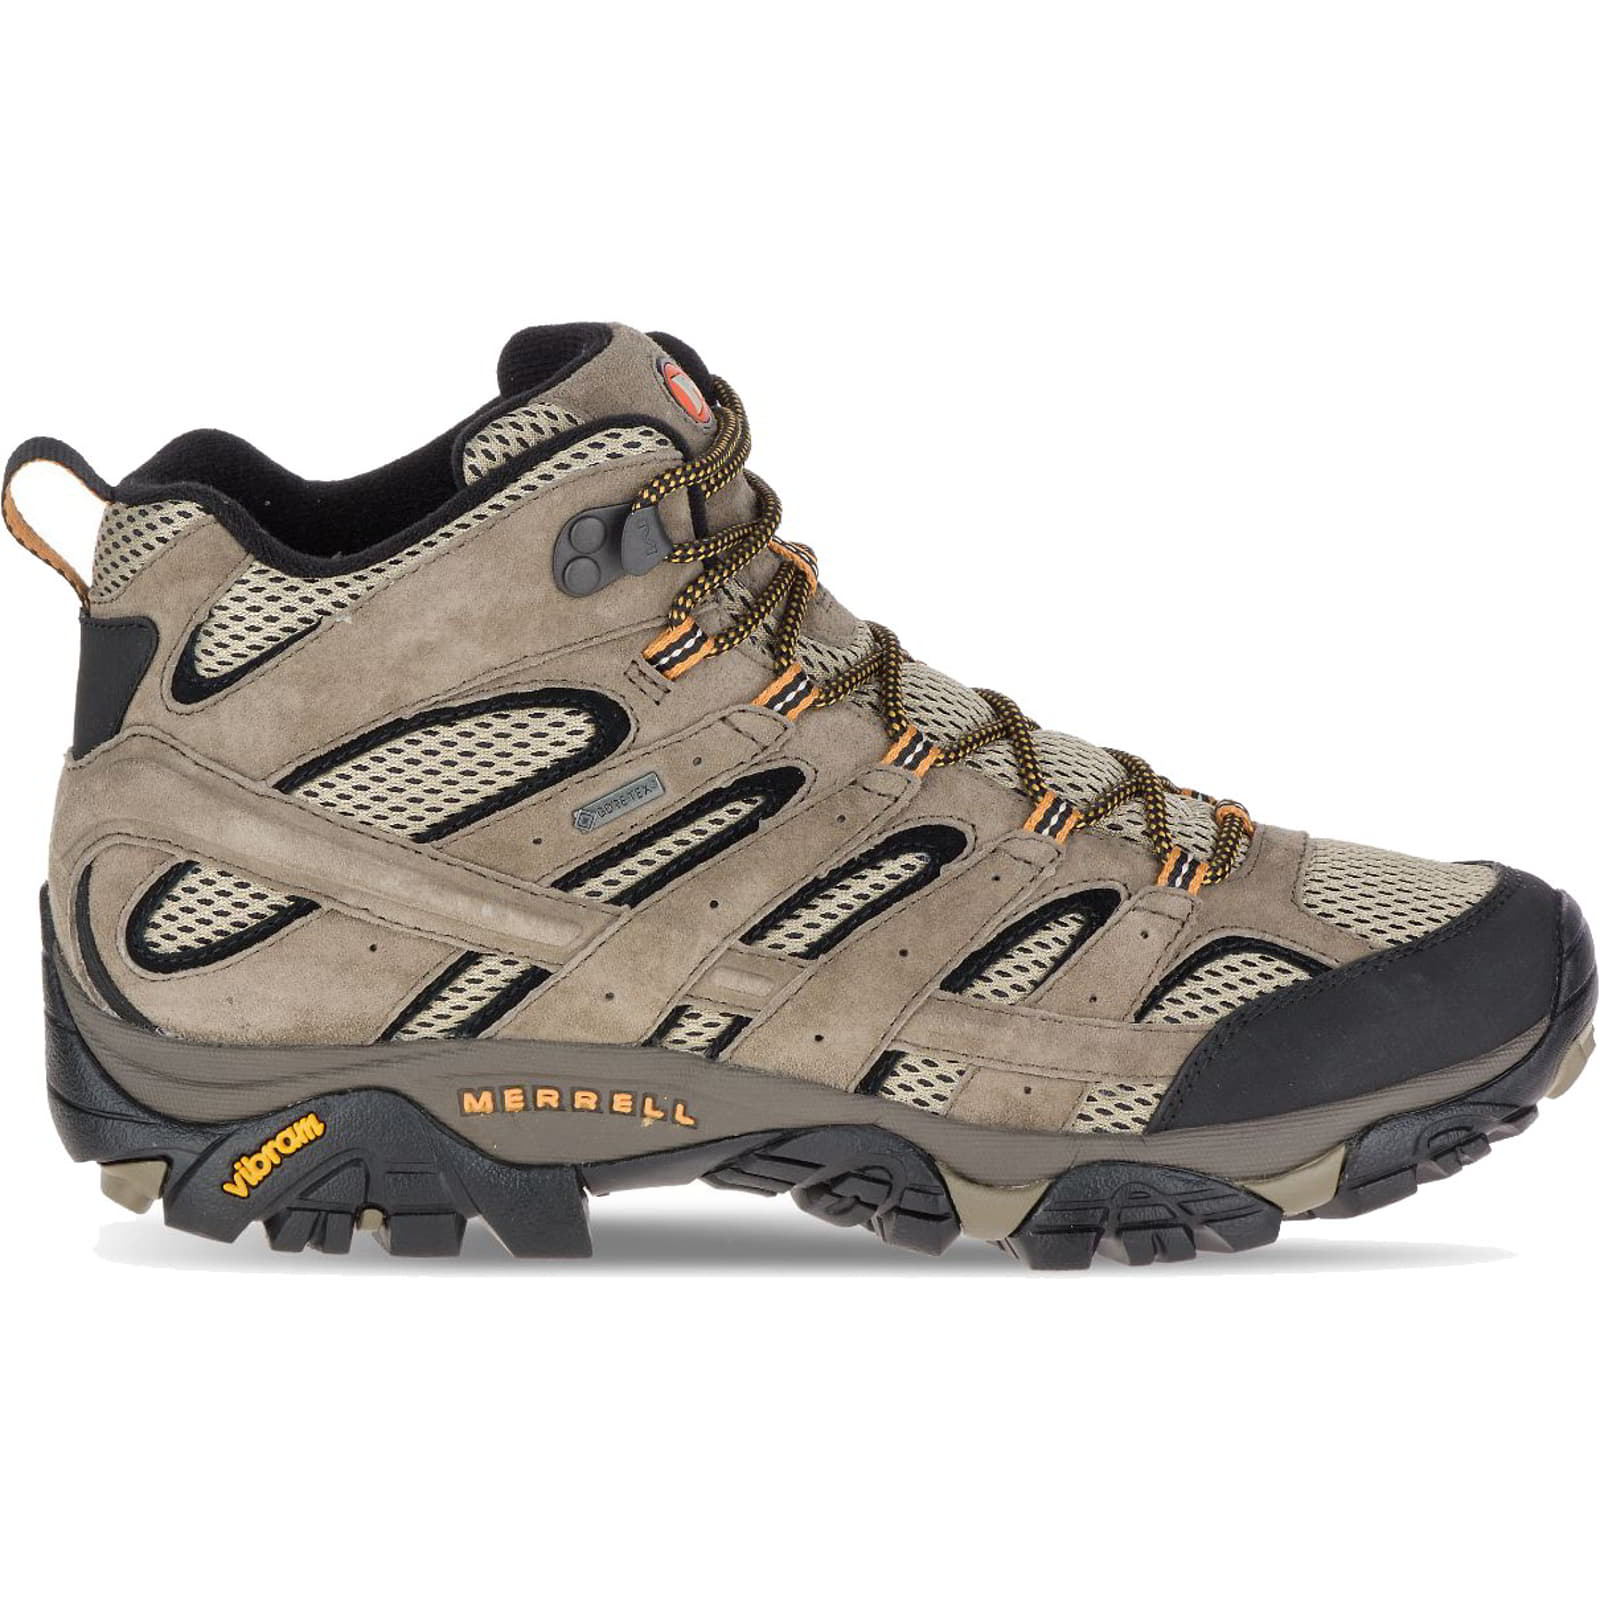 Merrell Men's Moab 2 Mid GTX Waterproof Walking Hiking Boots - UK 9